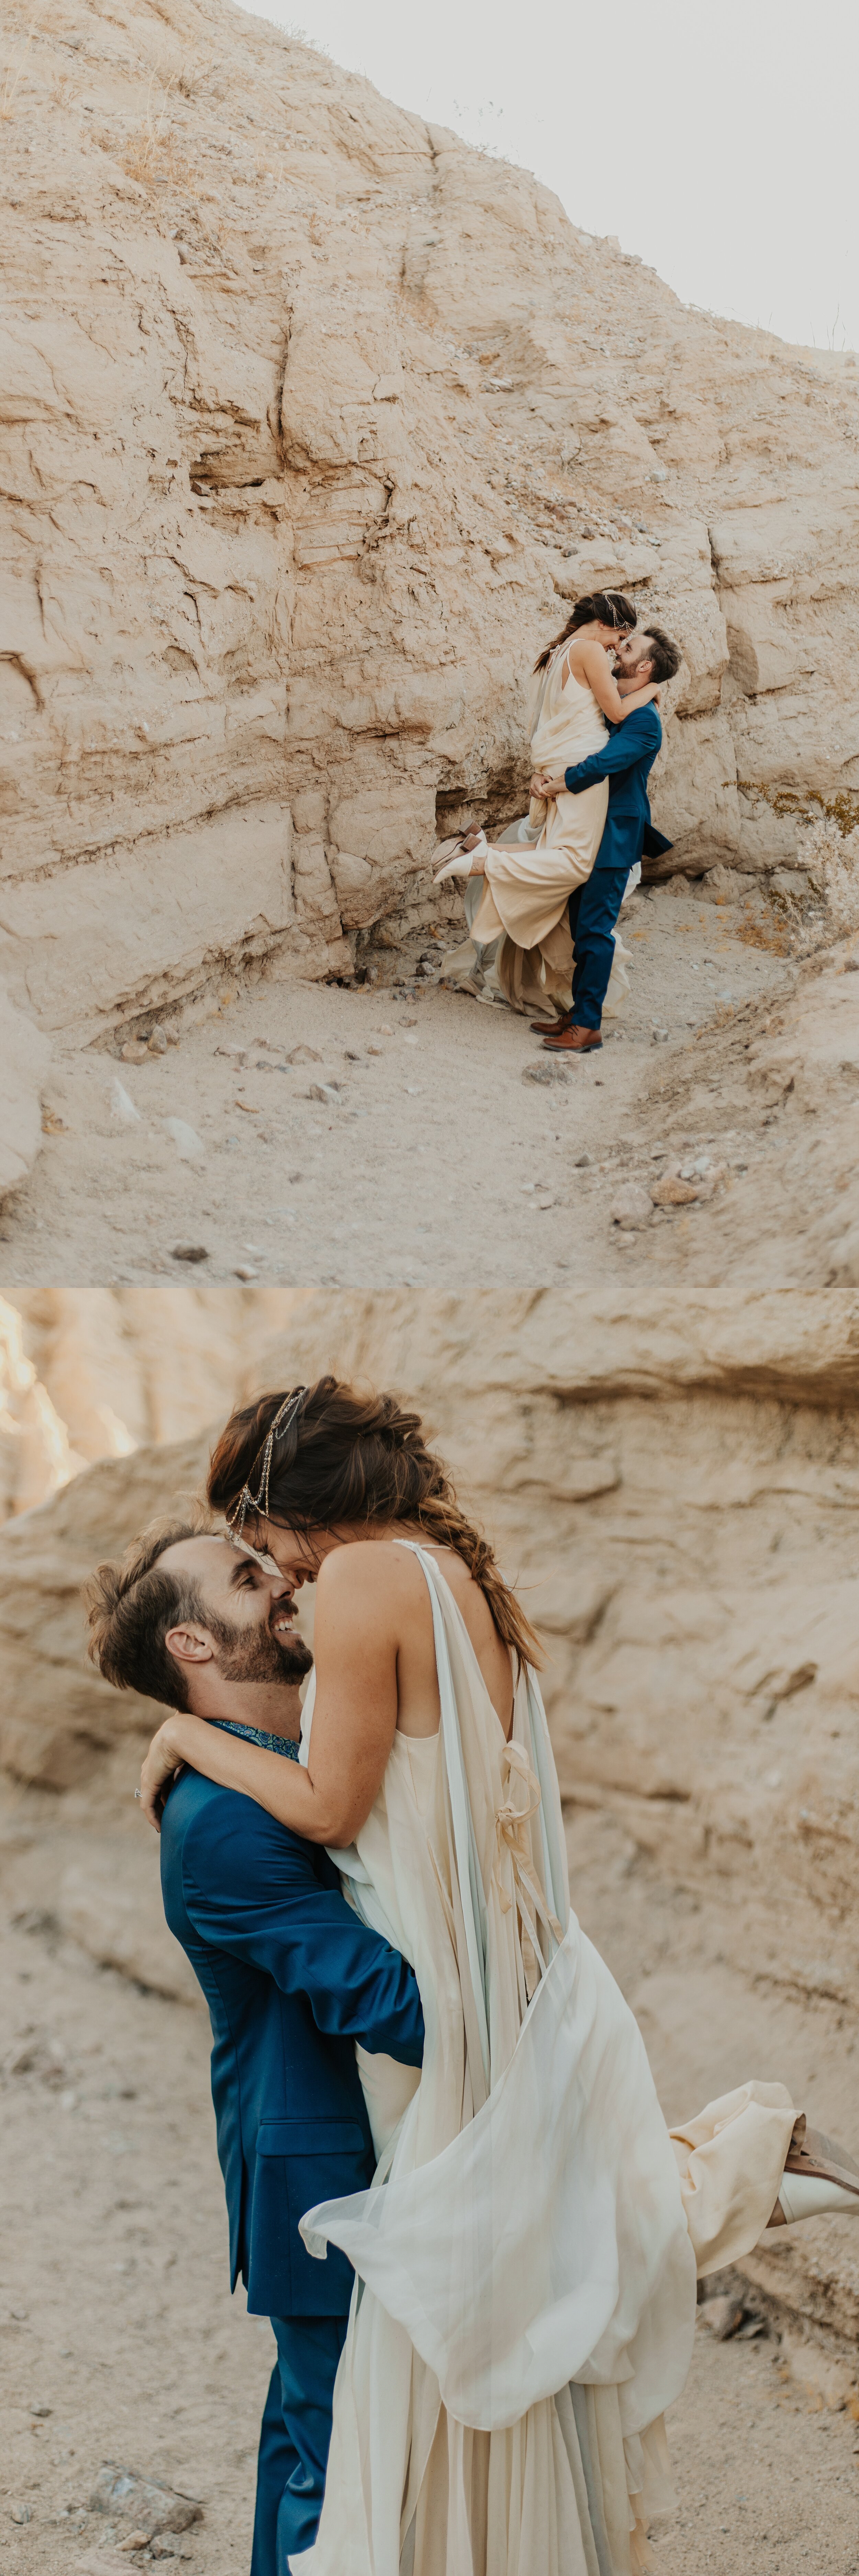 jessika-christine-photography-desert-elopement-couples-outdoor-adventurous-session (10).jpg